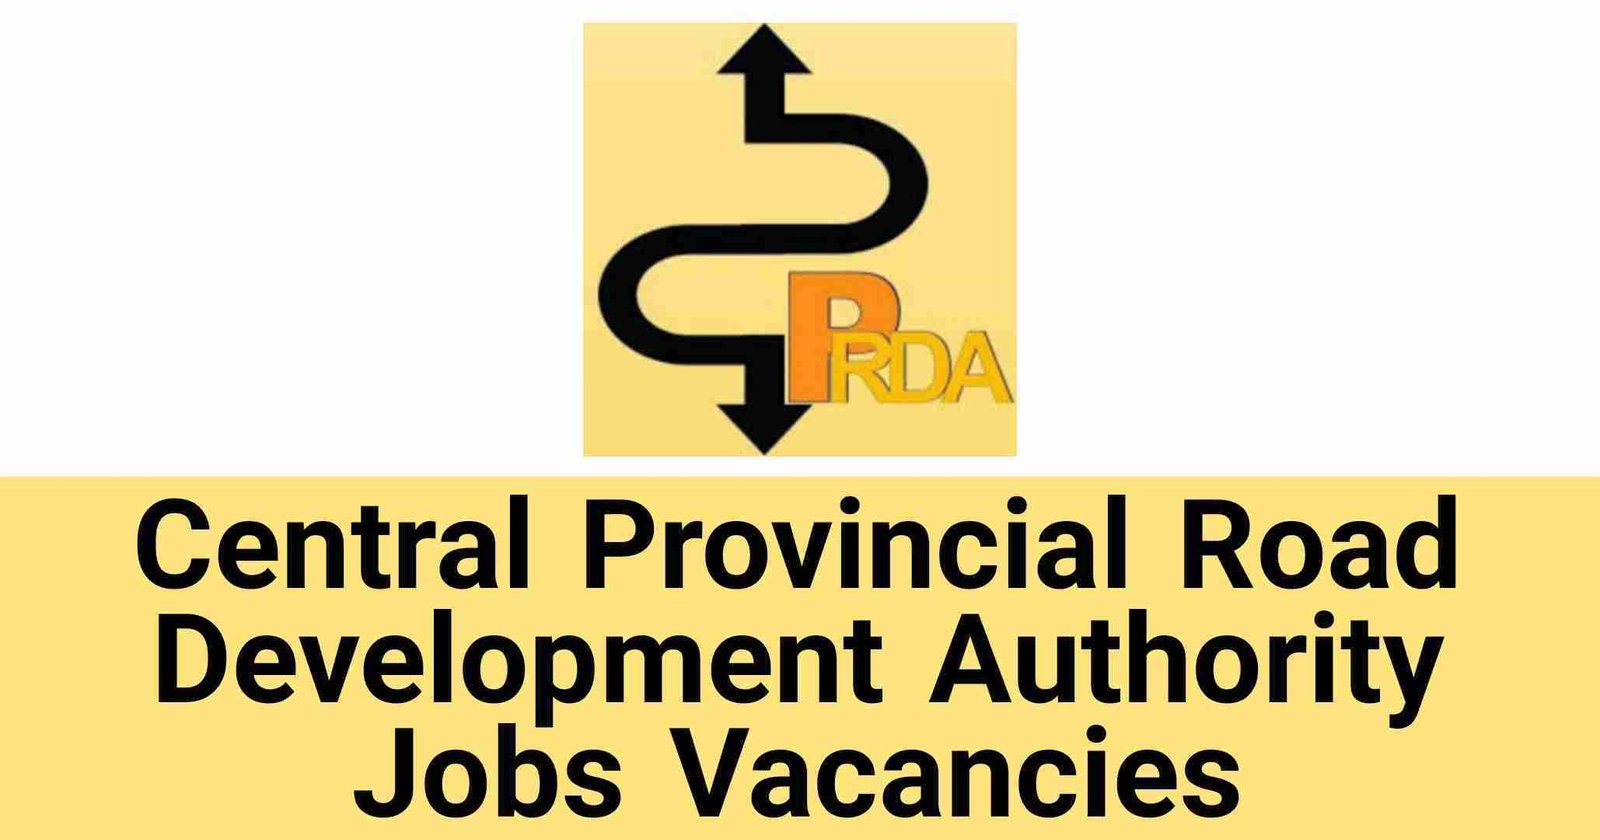 Central Provincial Road Development Authority Jobs Vacancies